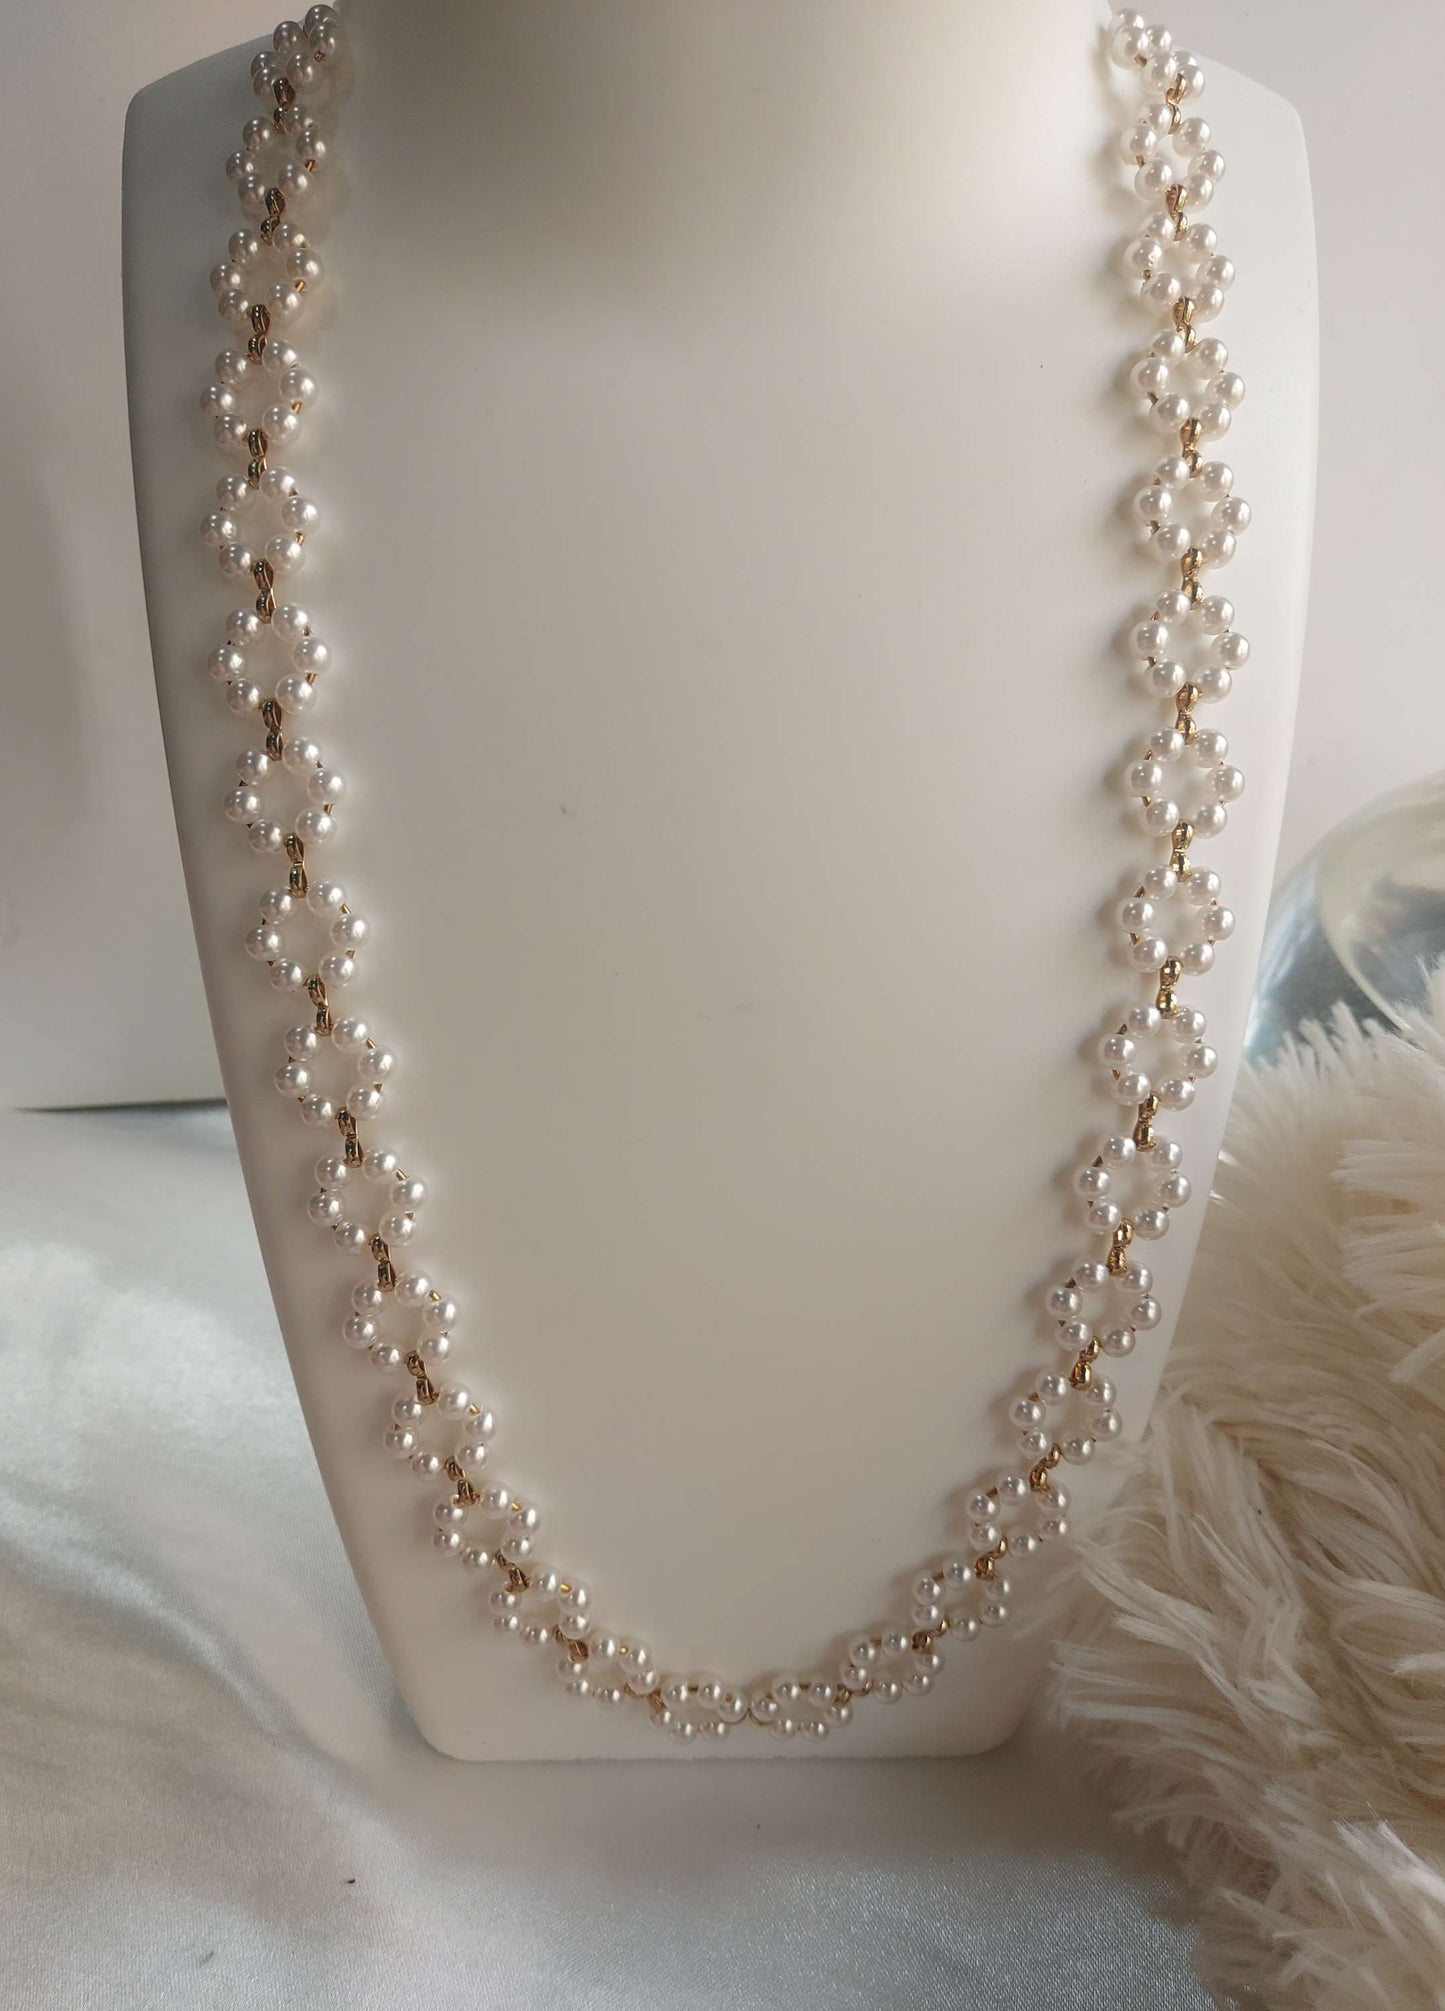 Faux pearl neckpiece